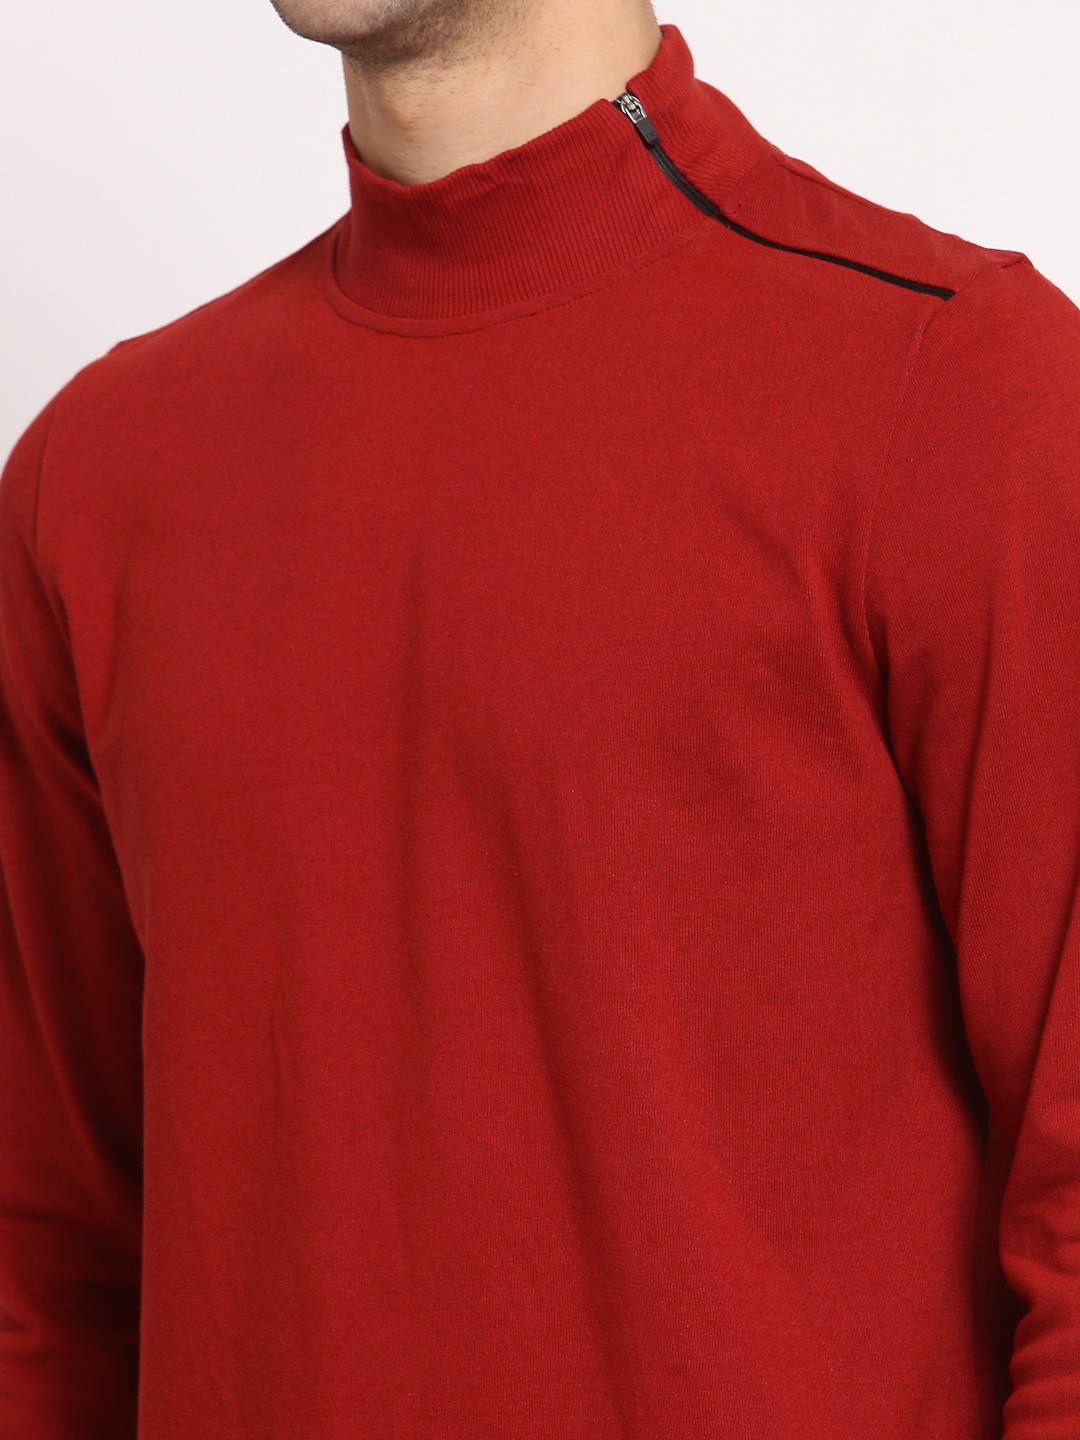 YOONOY | Men's Red Cotton Solid Sweatshirts 4